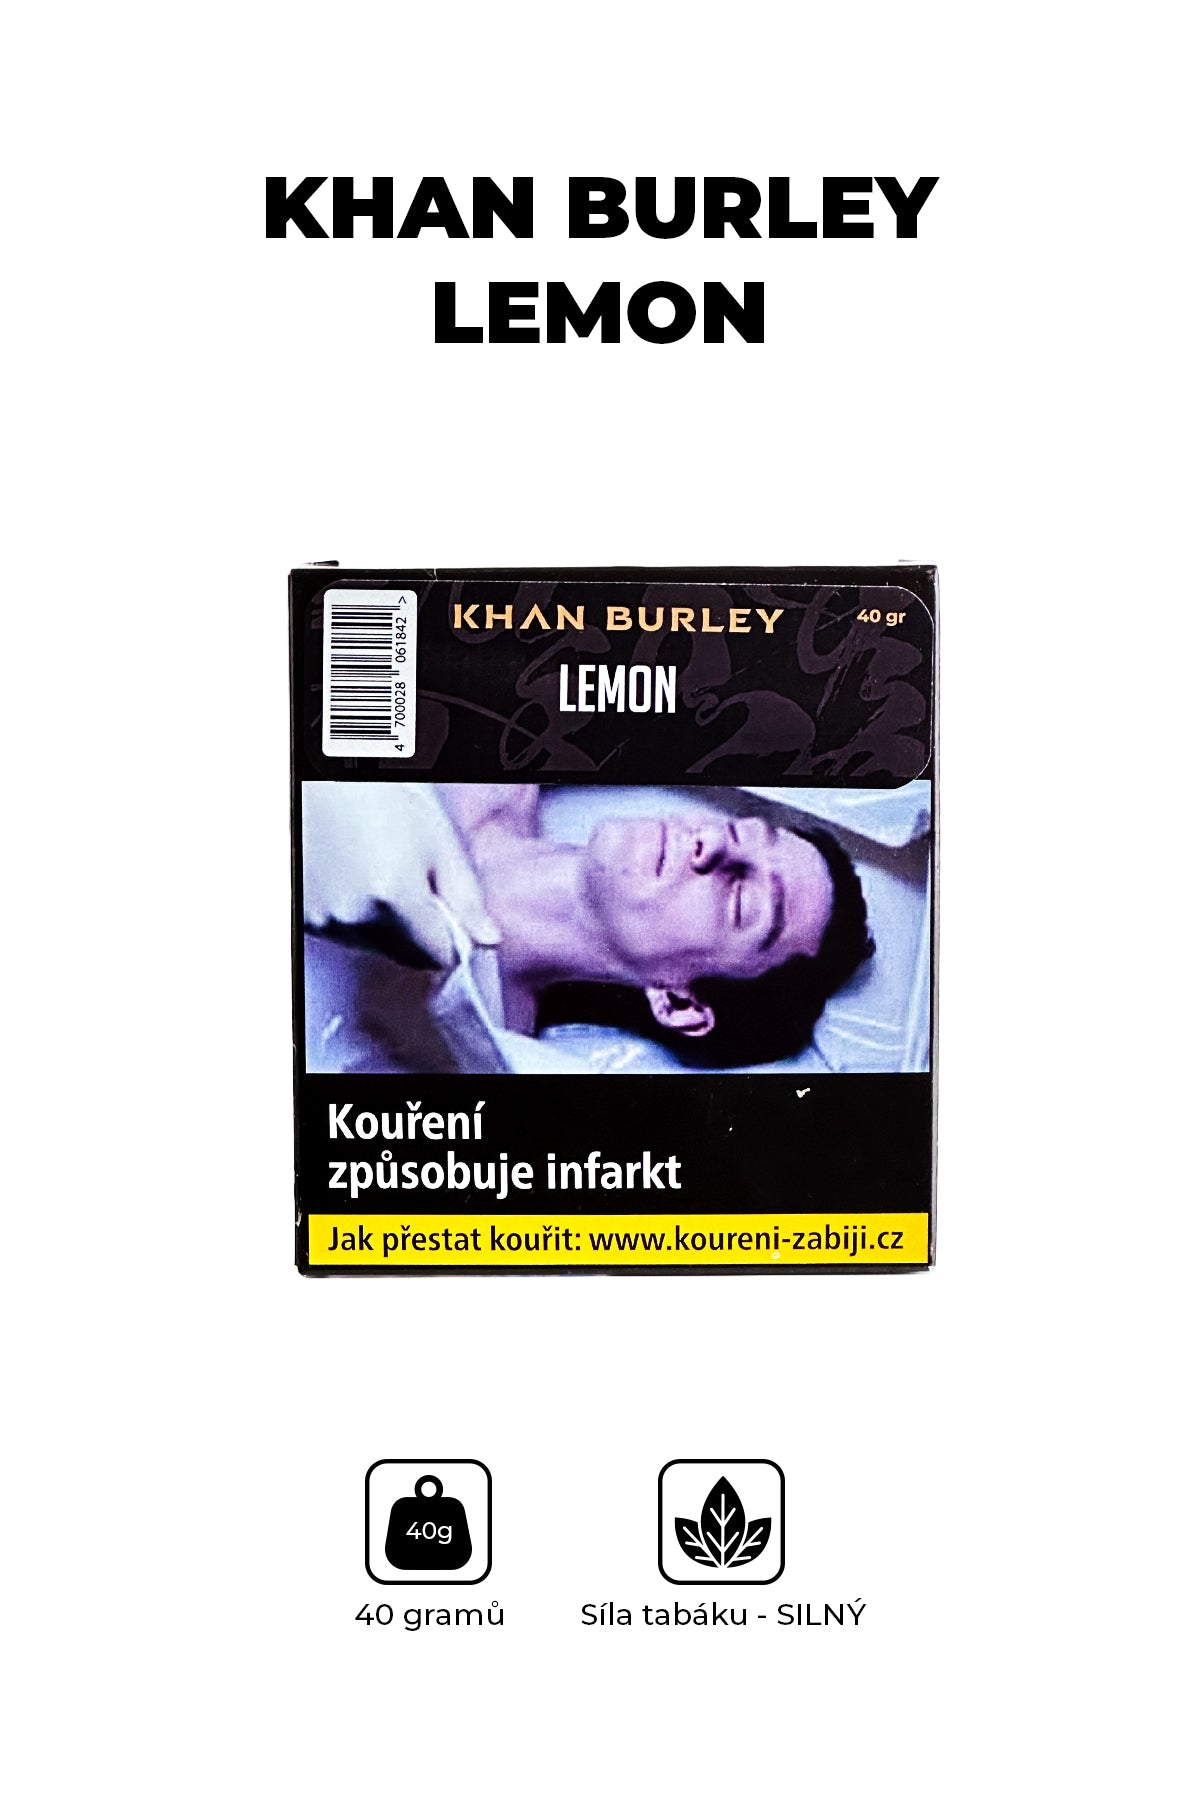 Tabák - Khan Burley 40g - Lemon